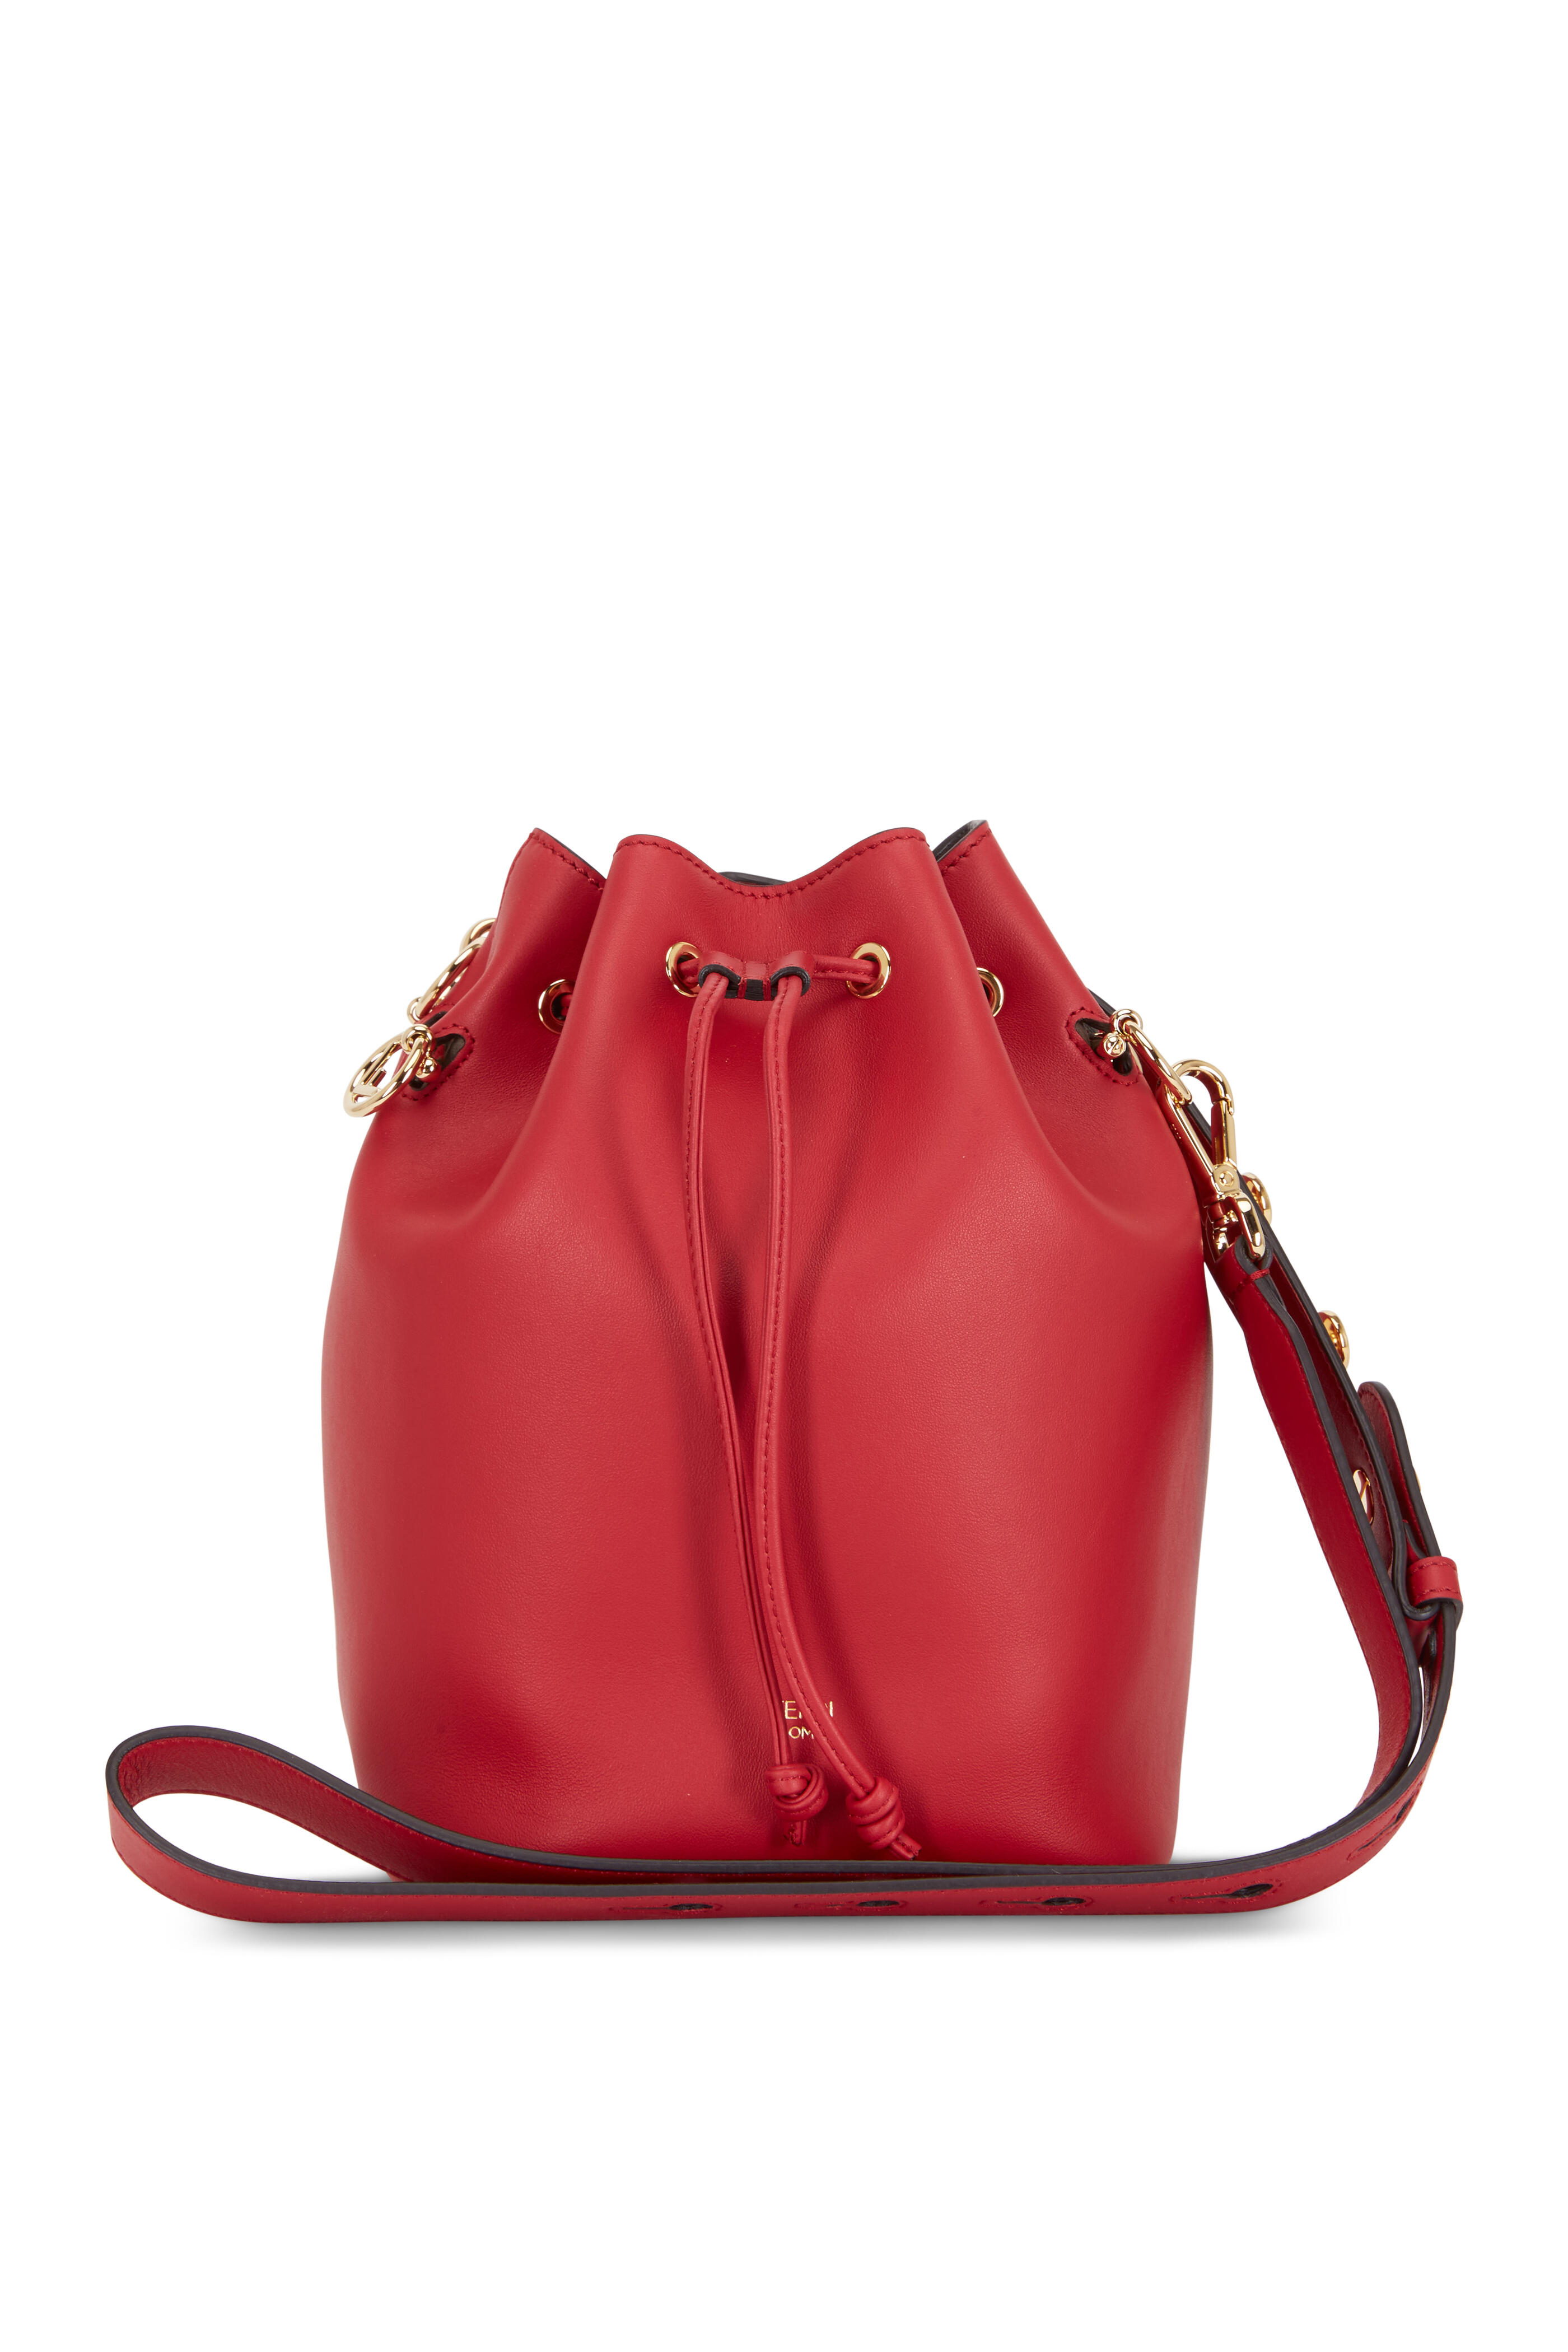 Fendi FF Embossed Mon Tresor Bucket Bag W/Red/Black (Retail $2490